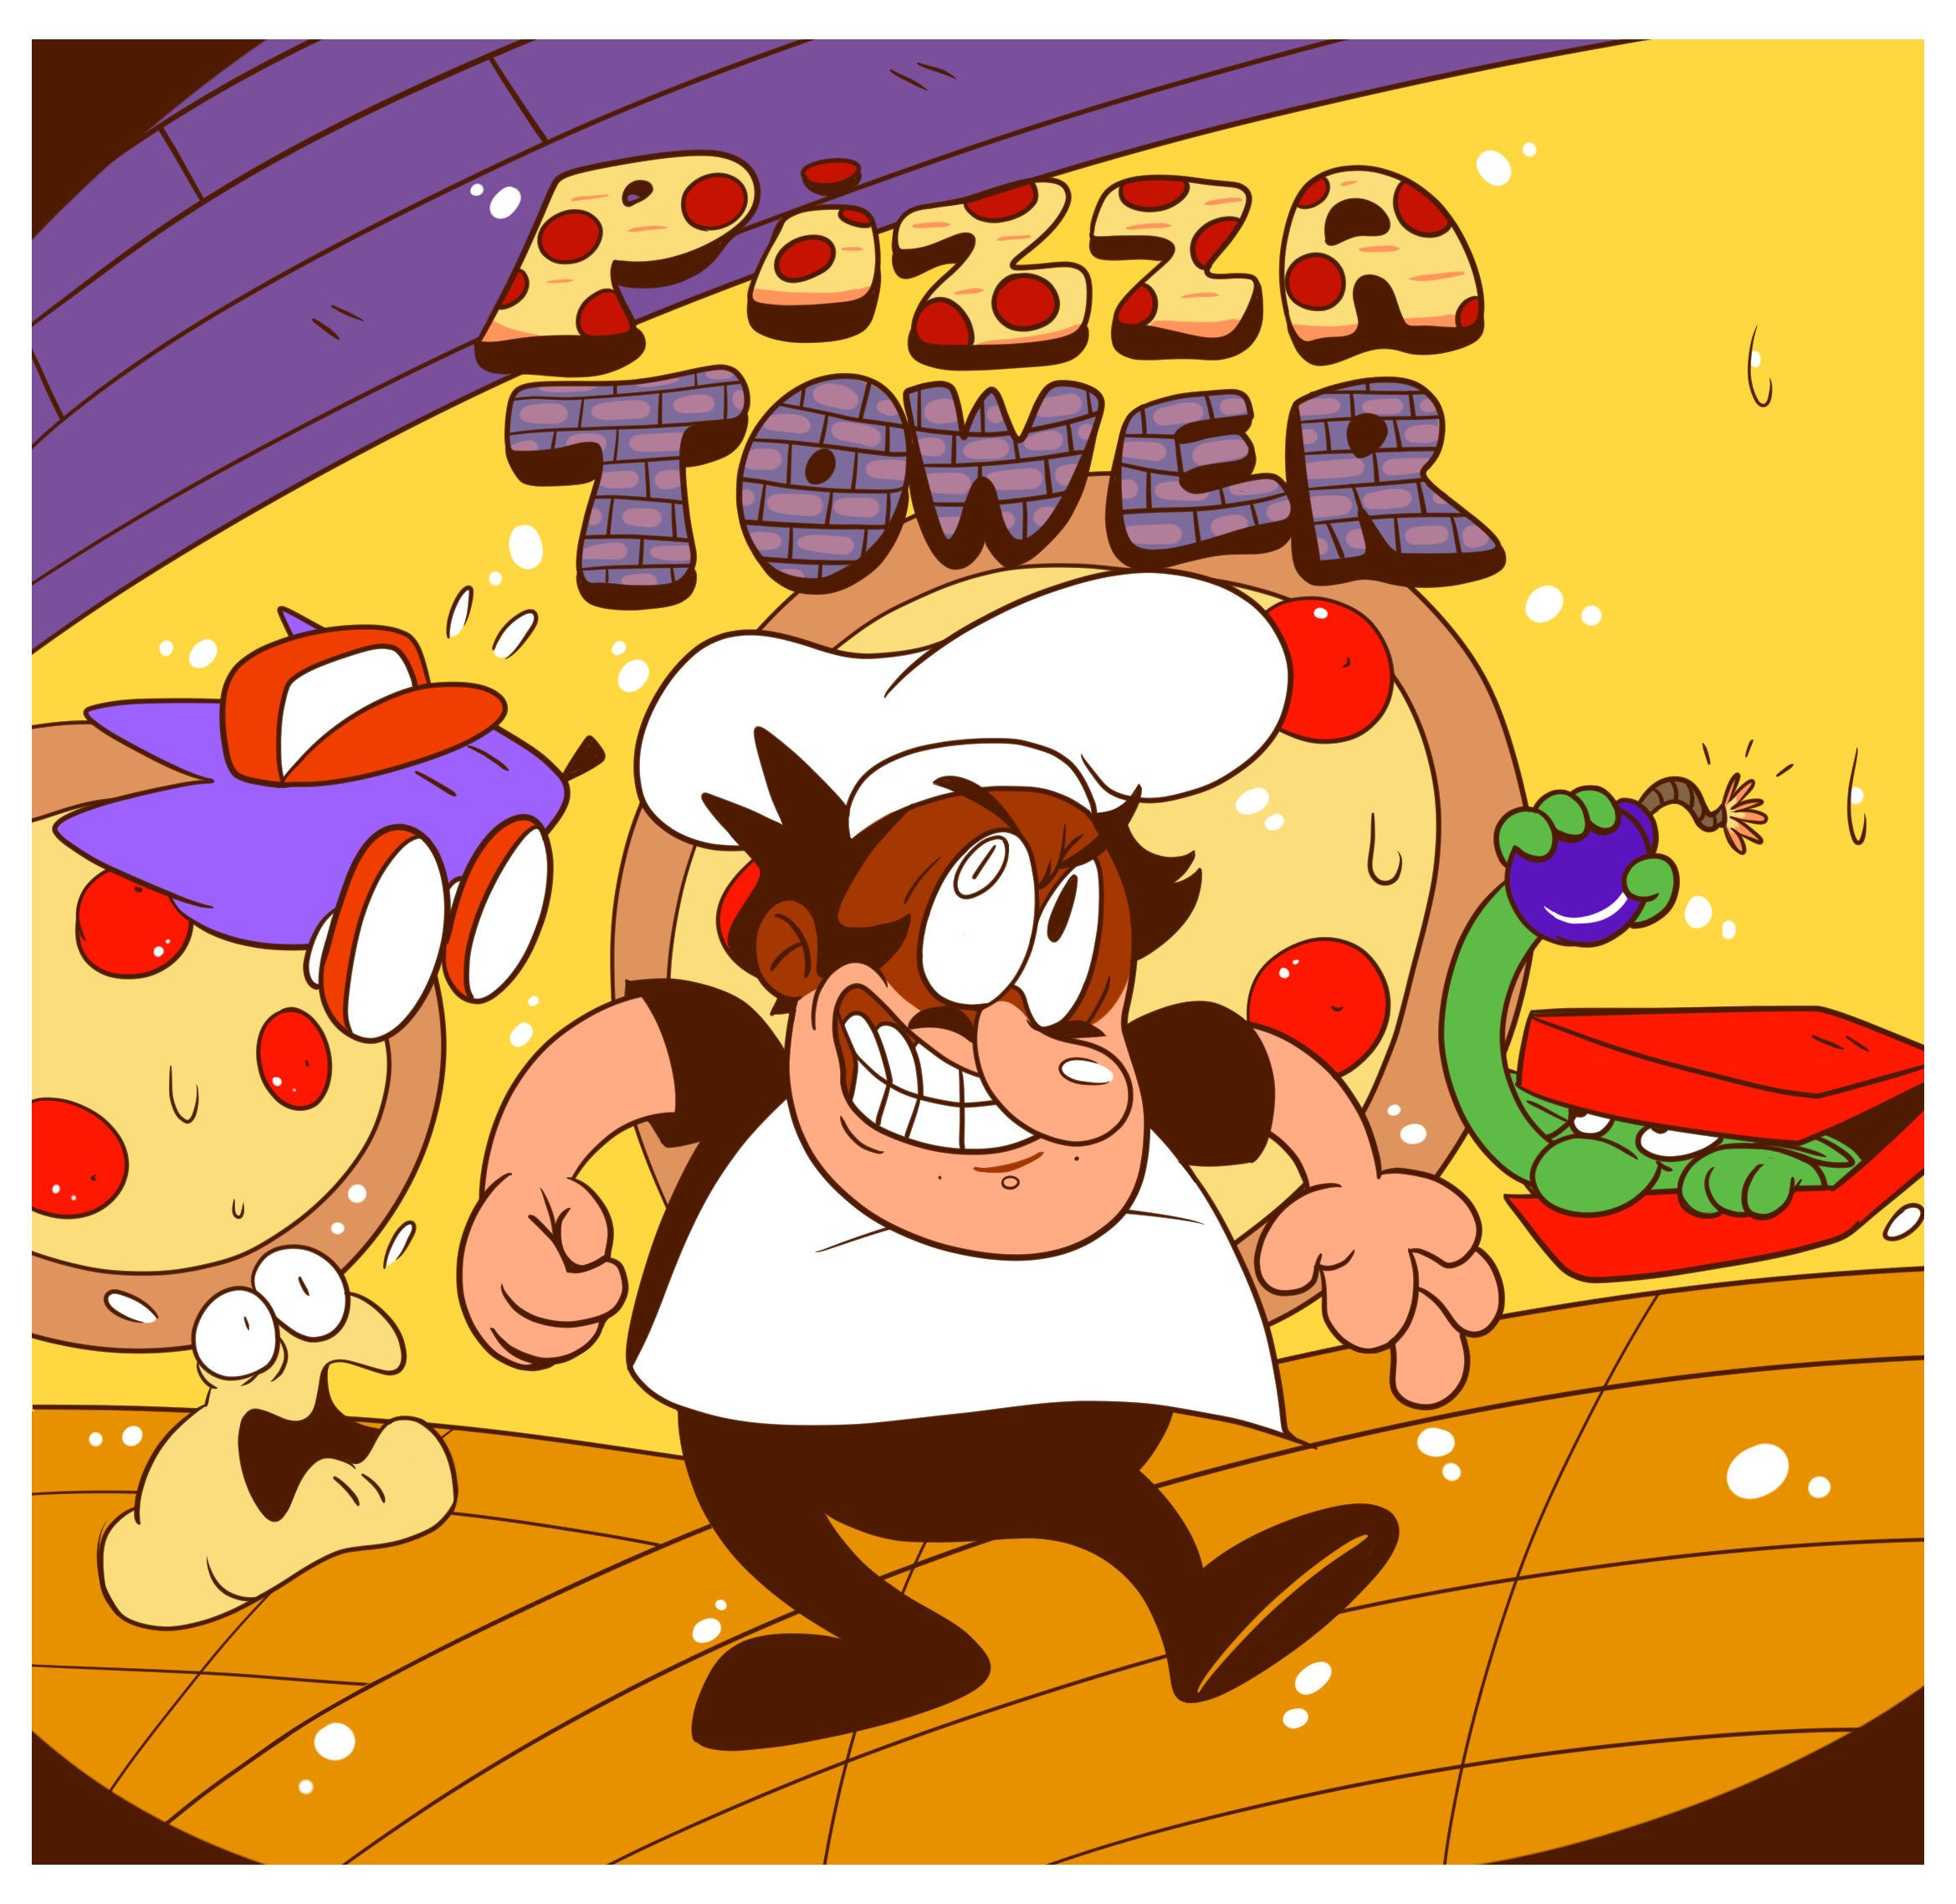 Пицца тавер песни. Пеппино pizza Tower. Pizza Tower игра. Snick pizza Tower. Peppino pizza Tower taunts.